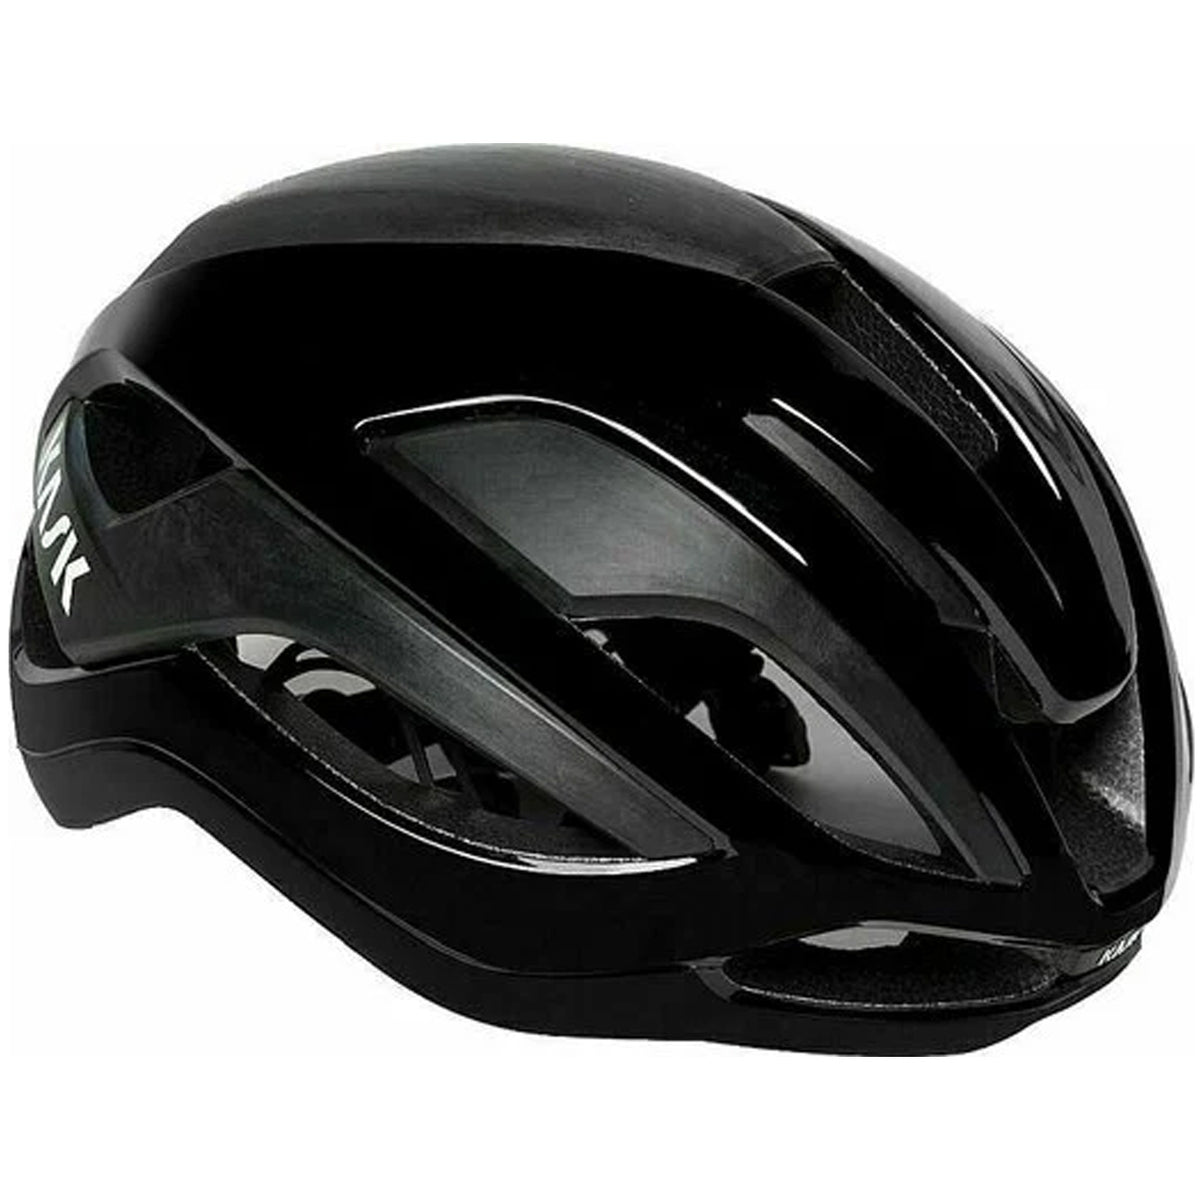 Kask Elemento helmet - Black – All4cycling